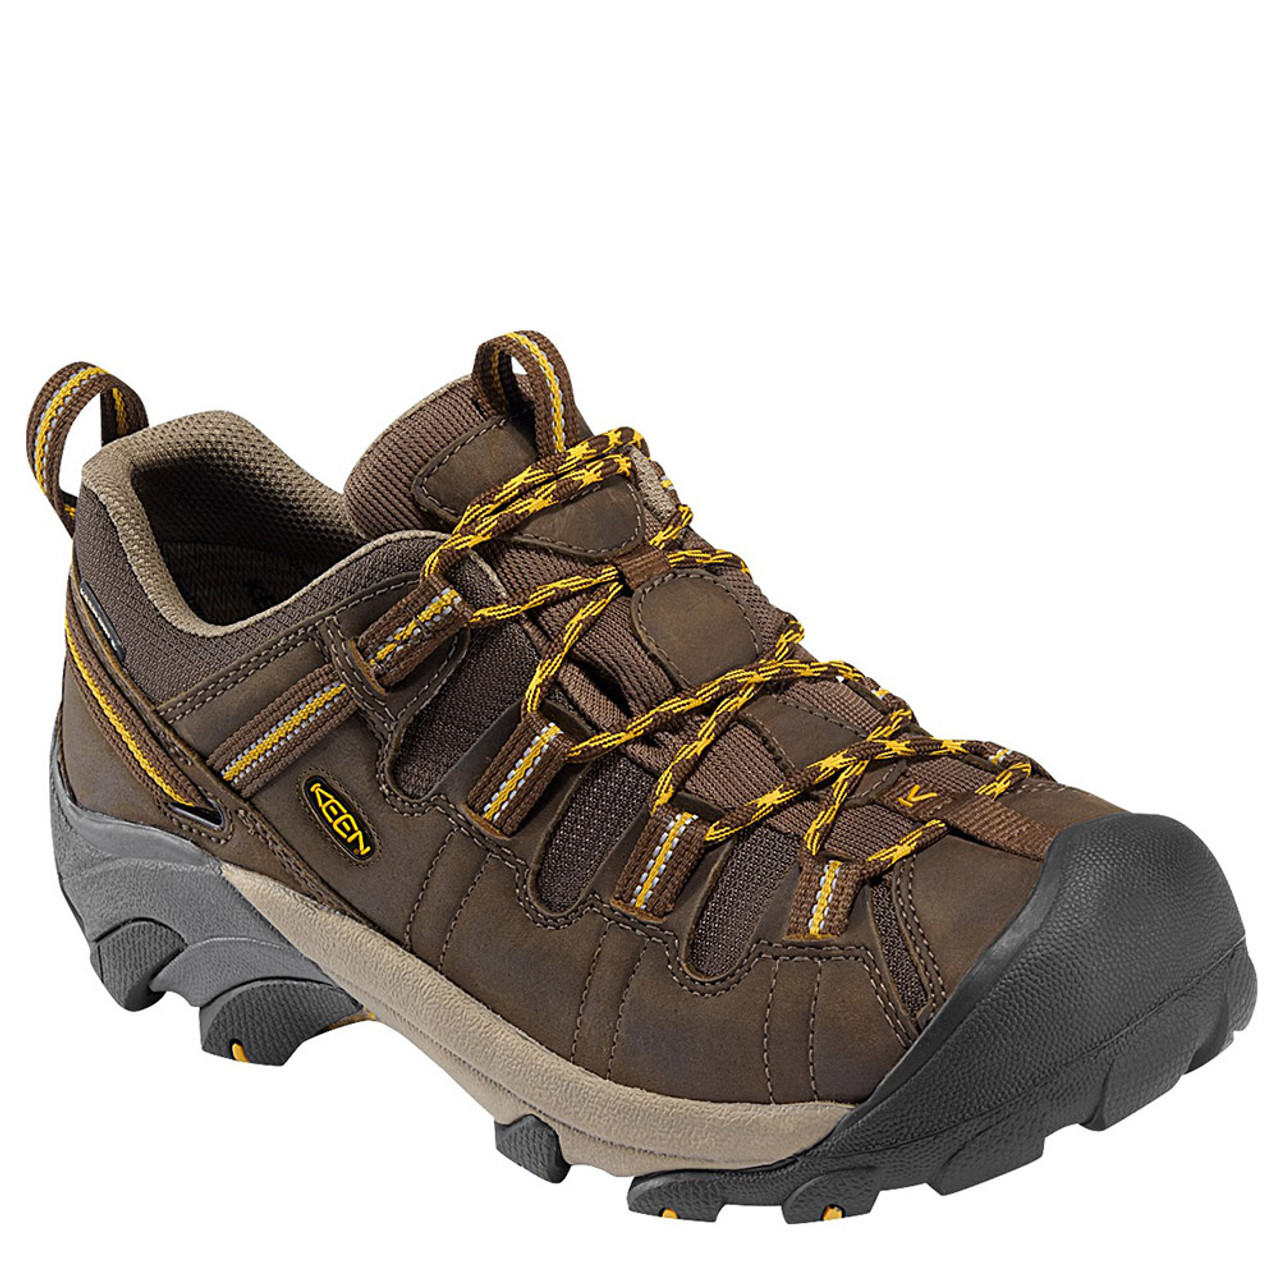 KEEN Targhee II Waterproof Hiking Shoes - Men's